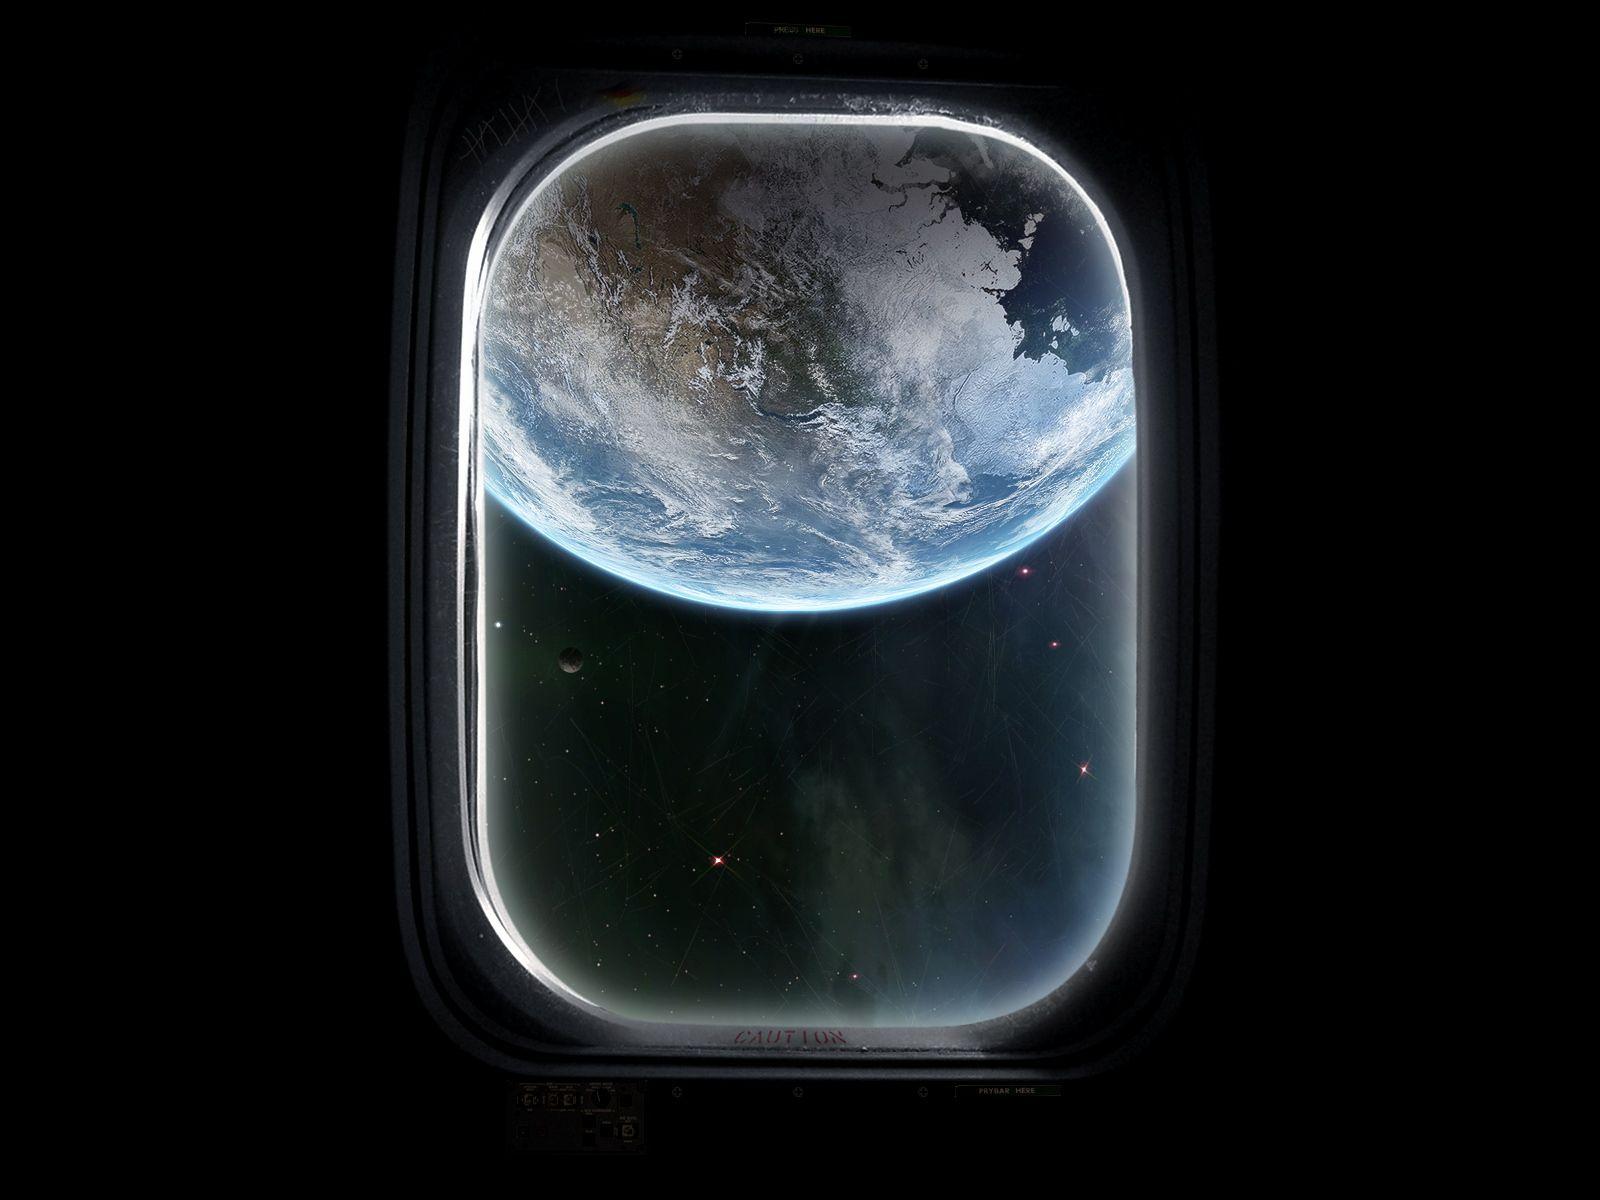 Digital Universe Space Window wallpaper Desktop, Phone, Tablet